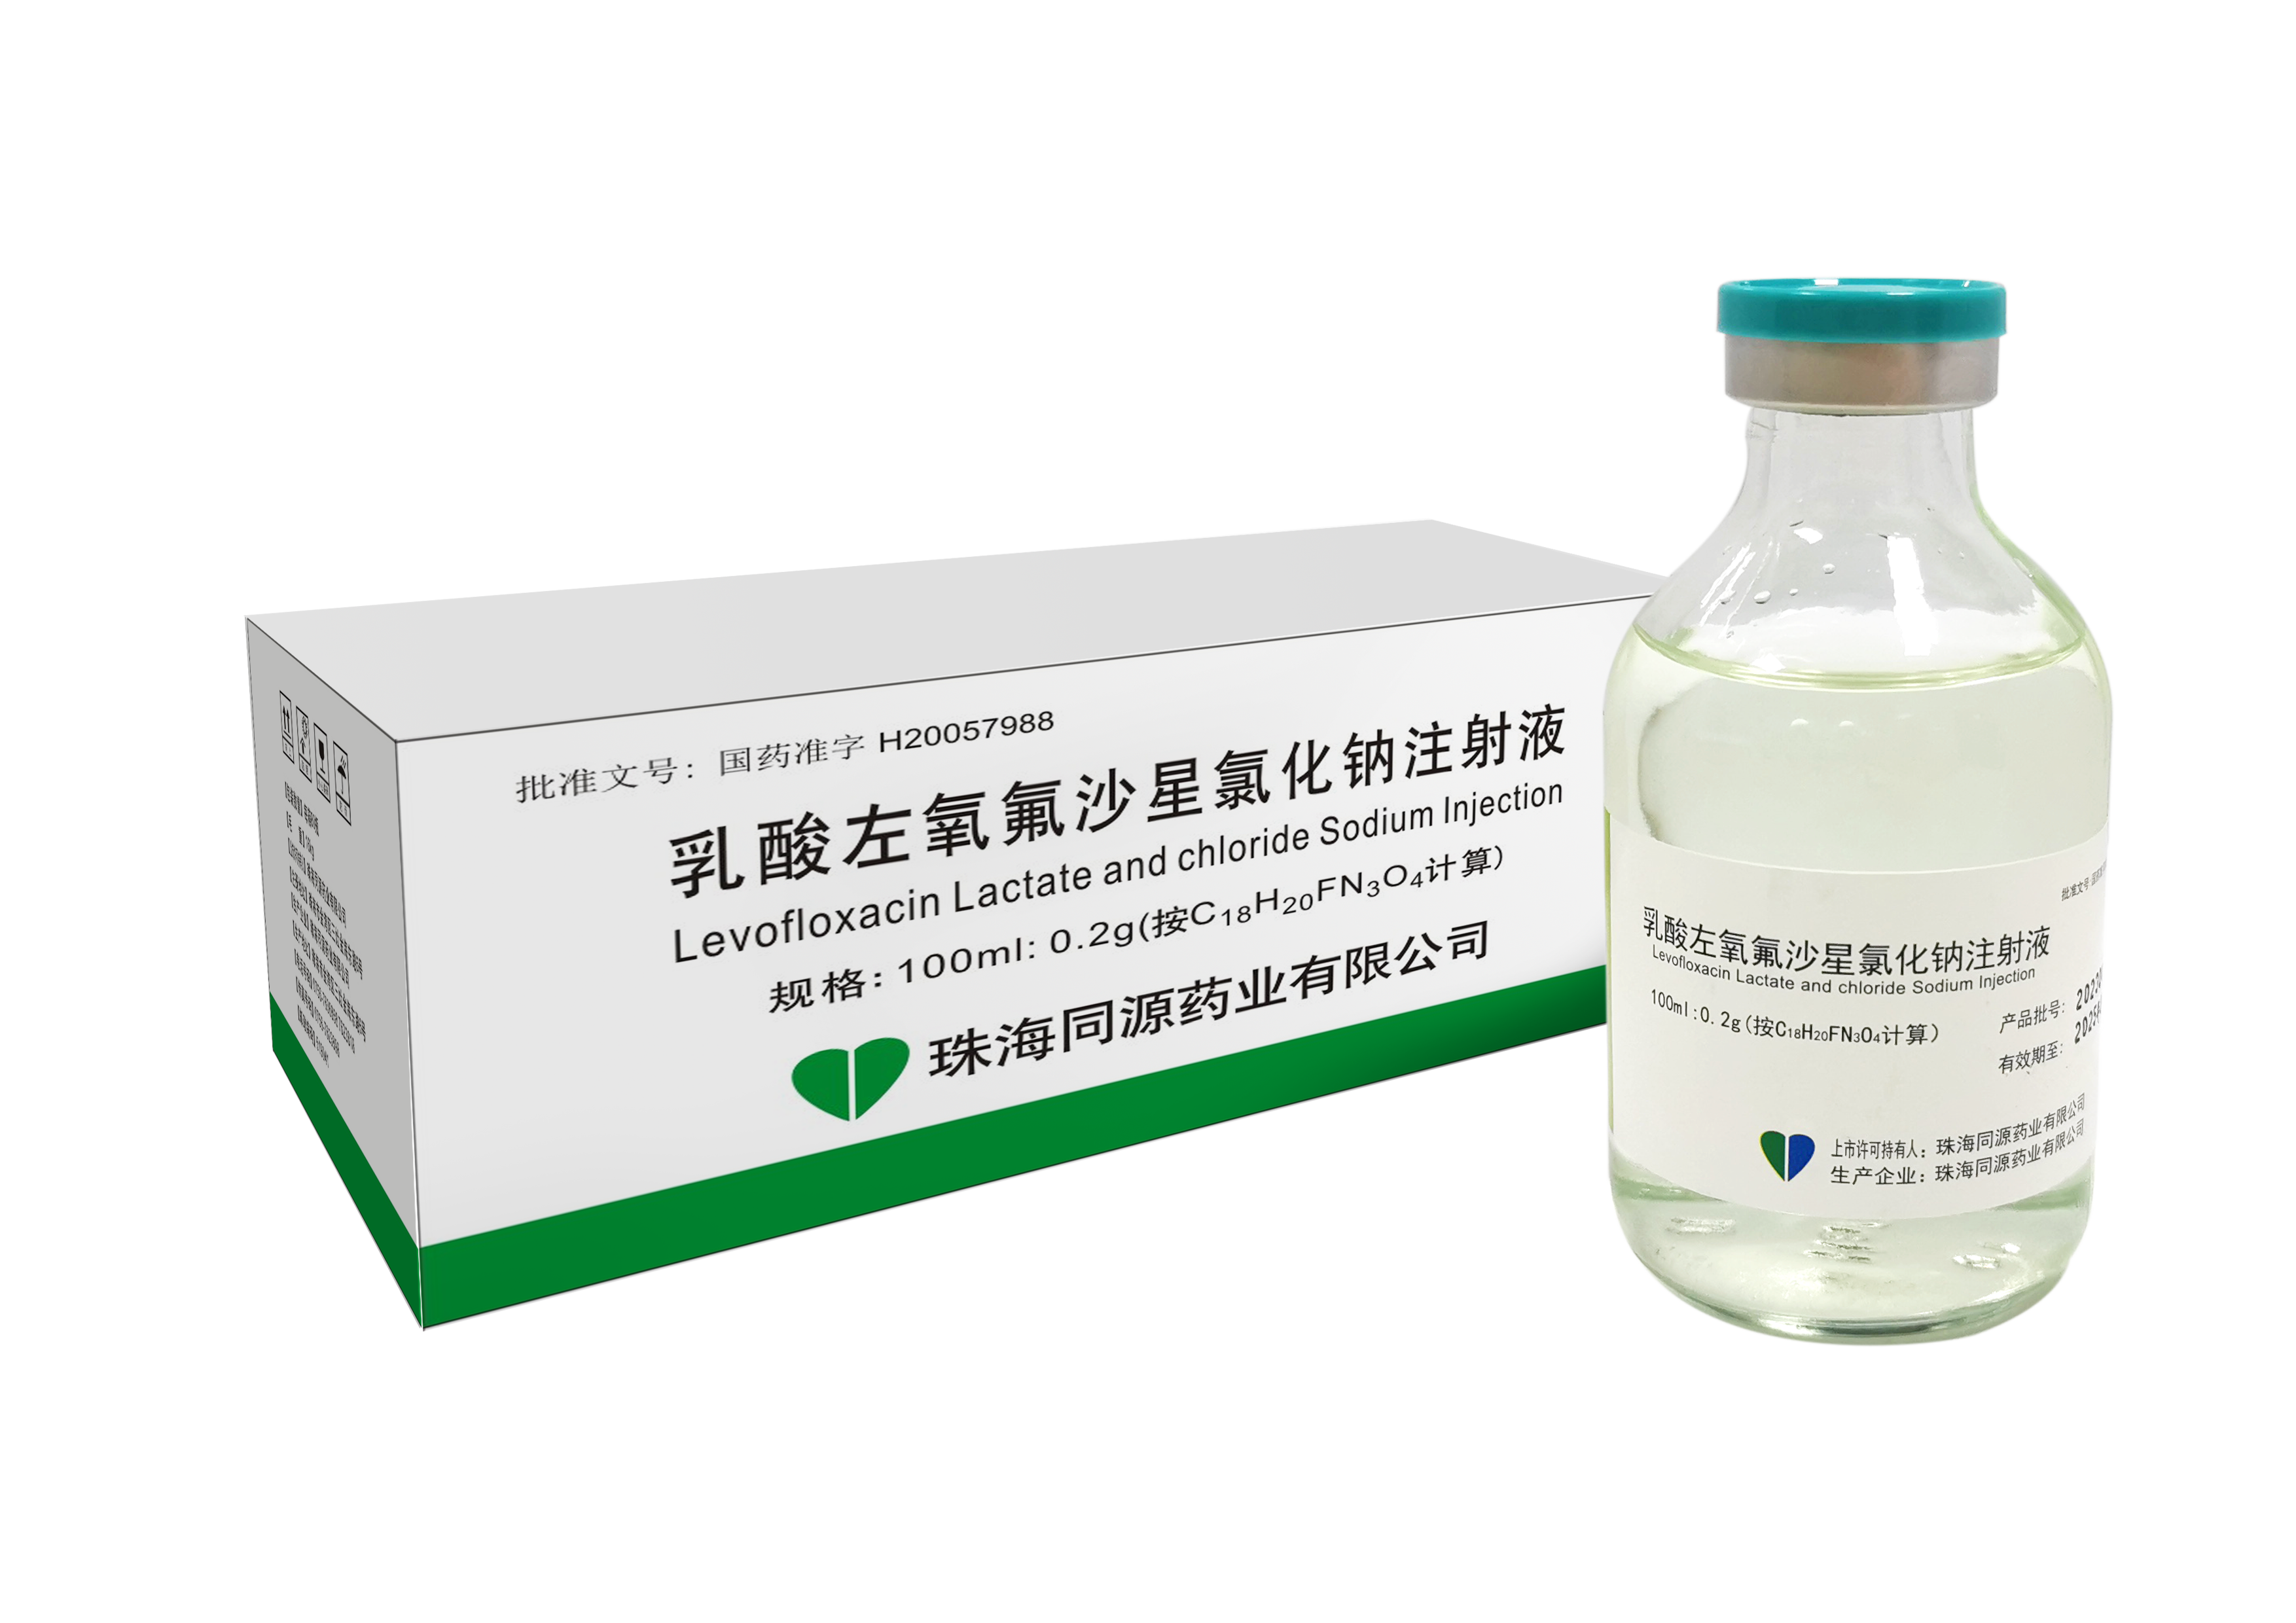 Levofloxacin Lactate and chloride Sodium Injection